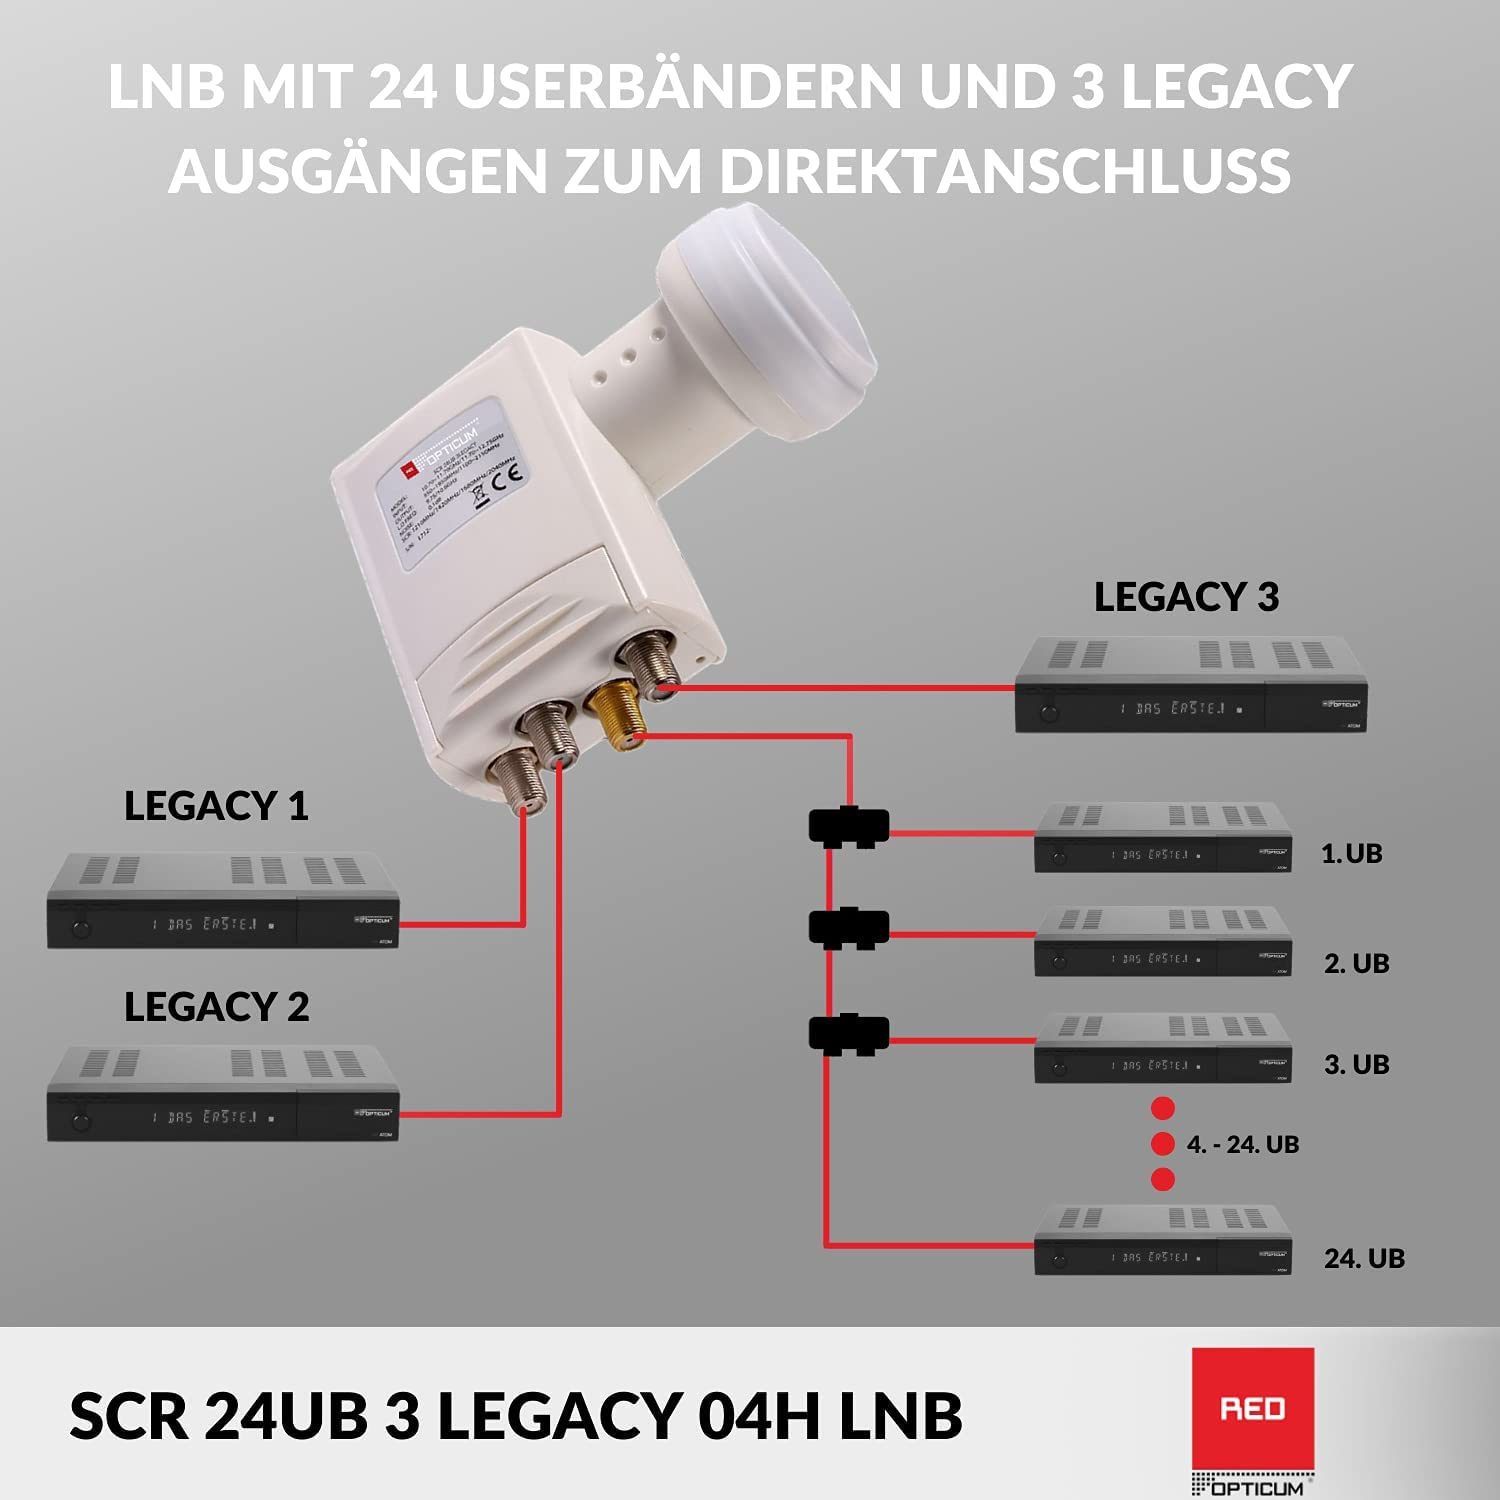 RED OPTICUM SCR 24-UB 3 - Direktanschluss Ausgänge Sat LNB LNB Legacy Legacy CR 24 Unicable Unicable & LNB 3 Userbänder zum